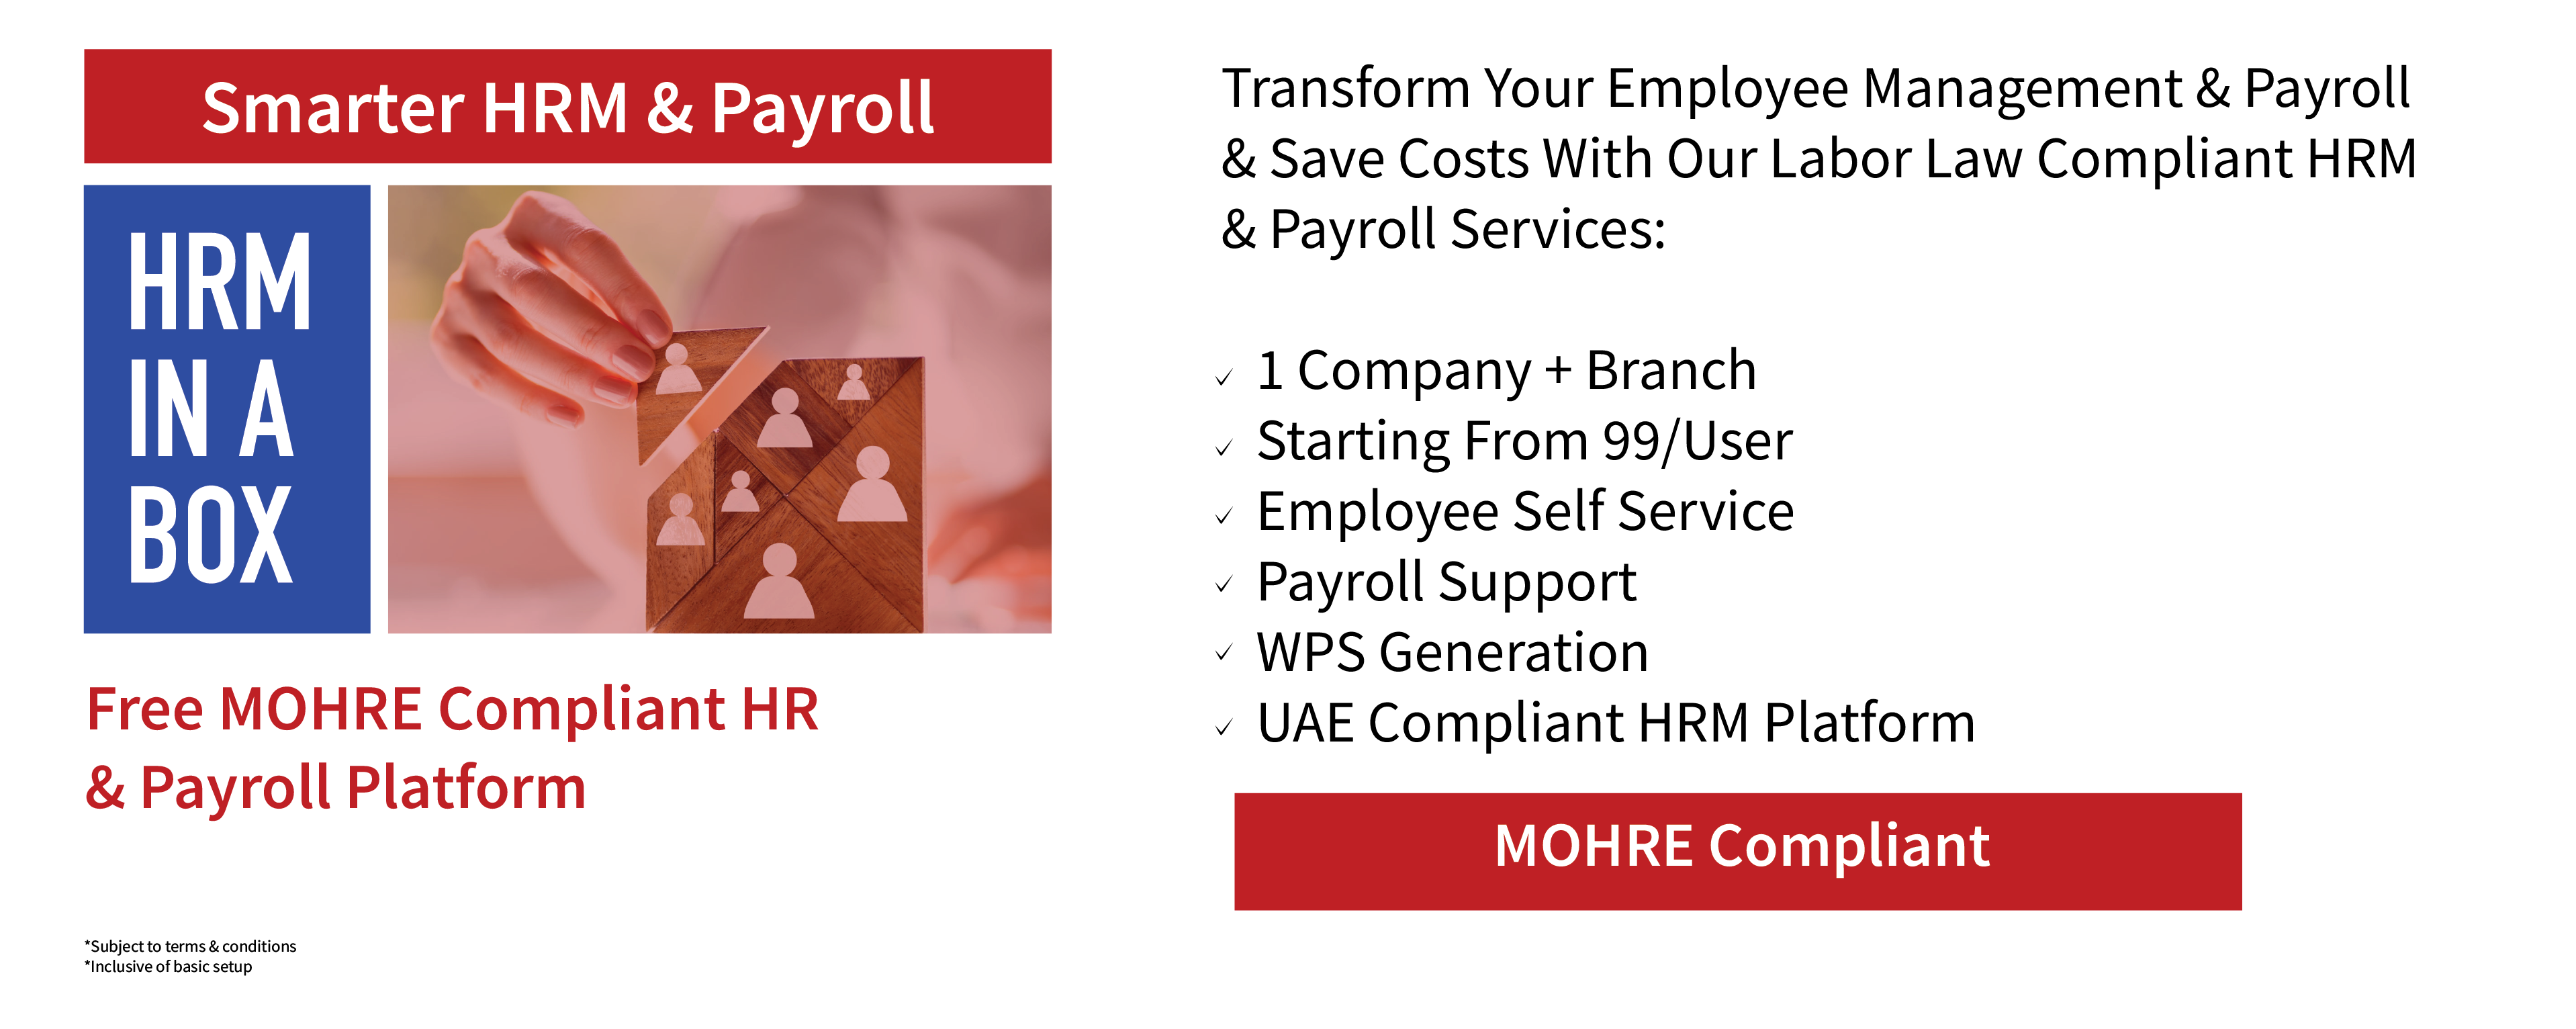 Smarter HRM & Payroll